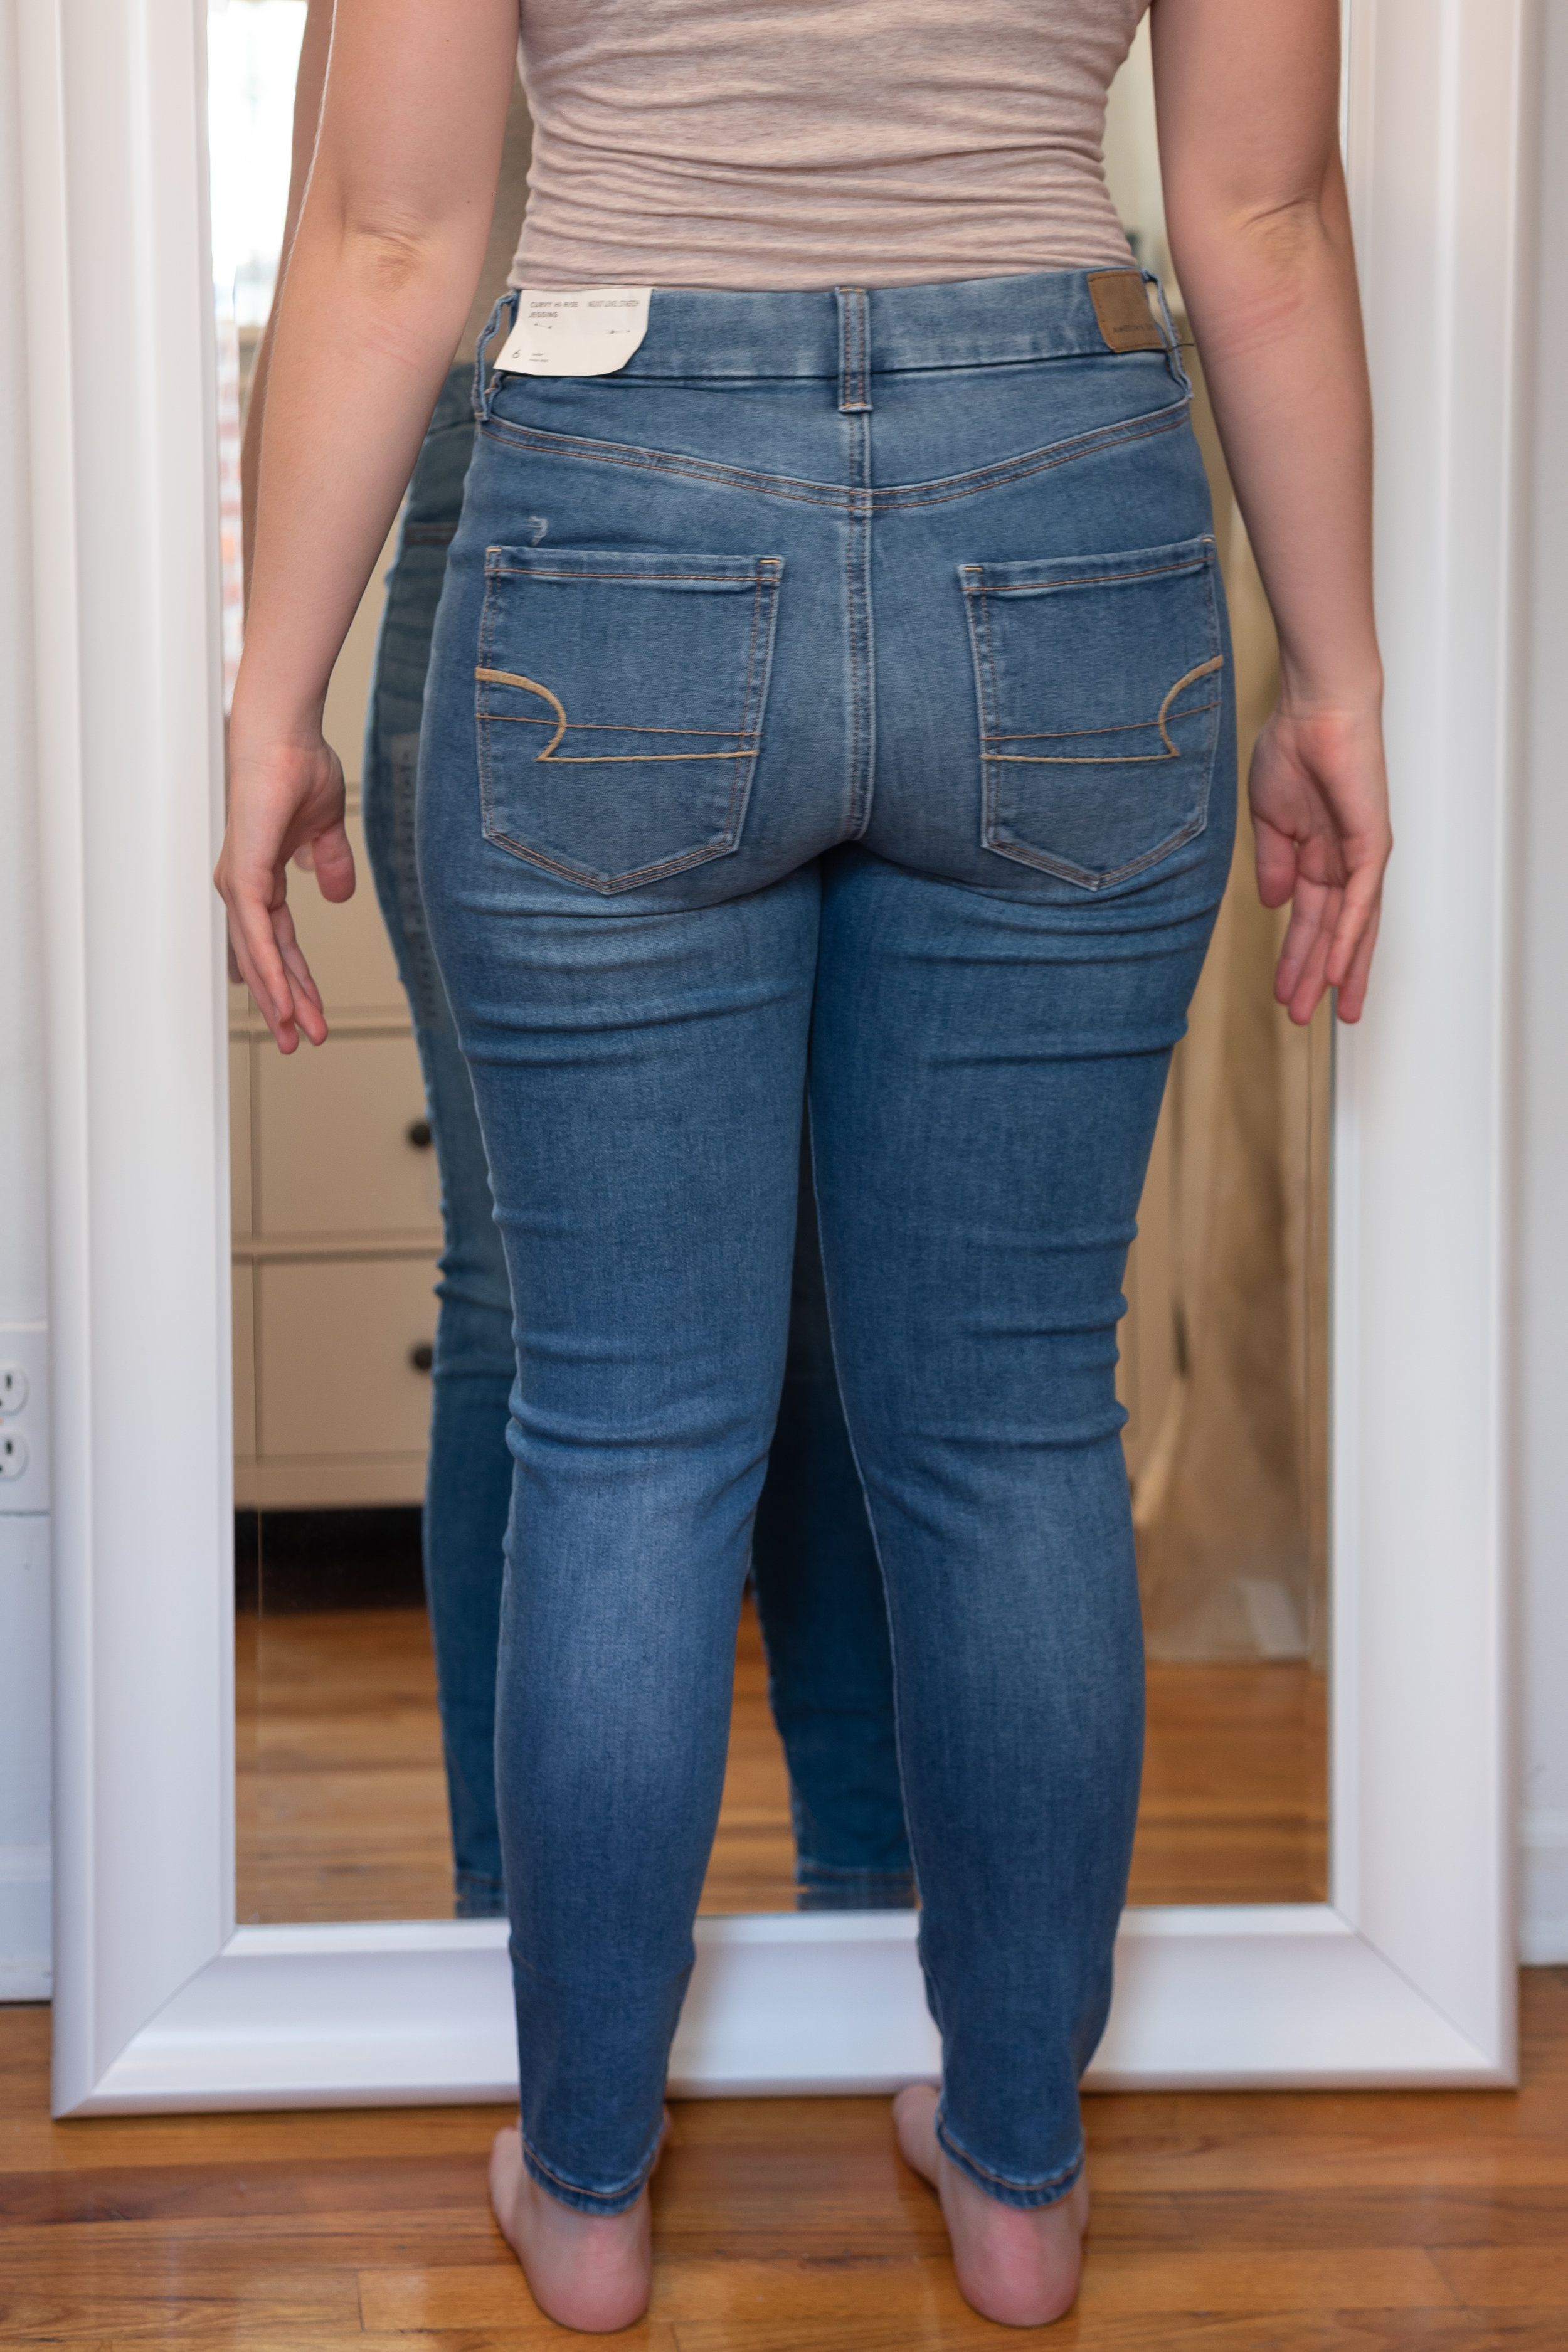 American Eagle Women’s Jean Shorts Sizes 0,2,4,6,8 NWT 